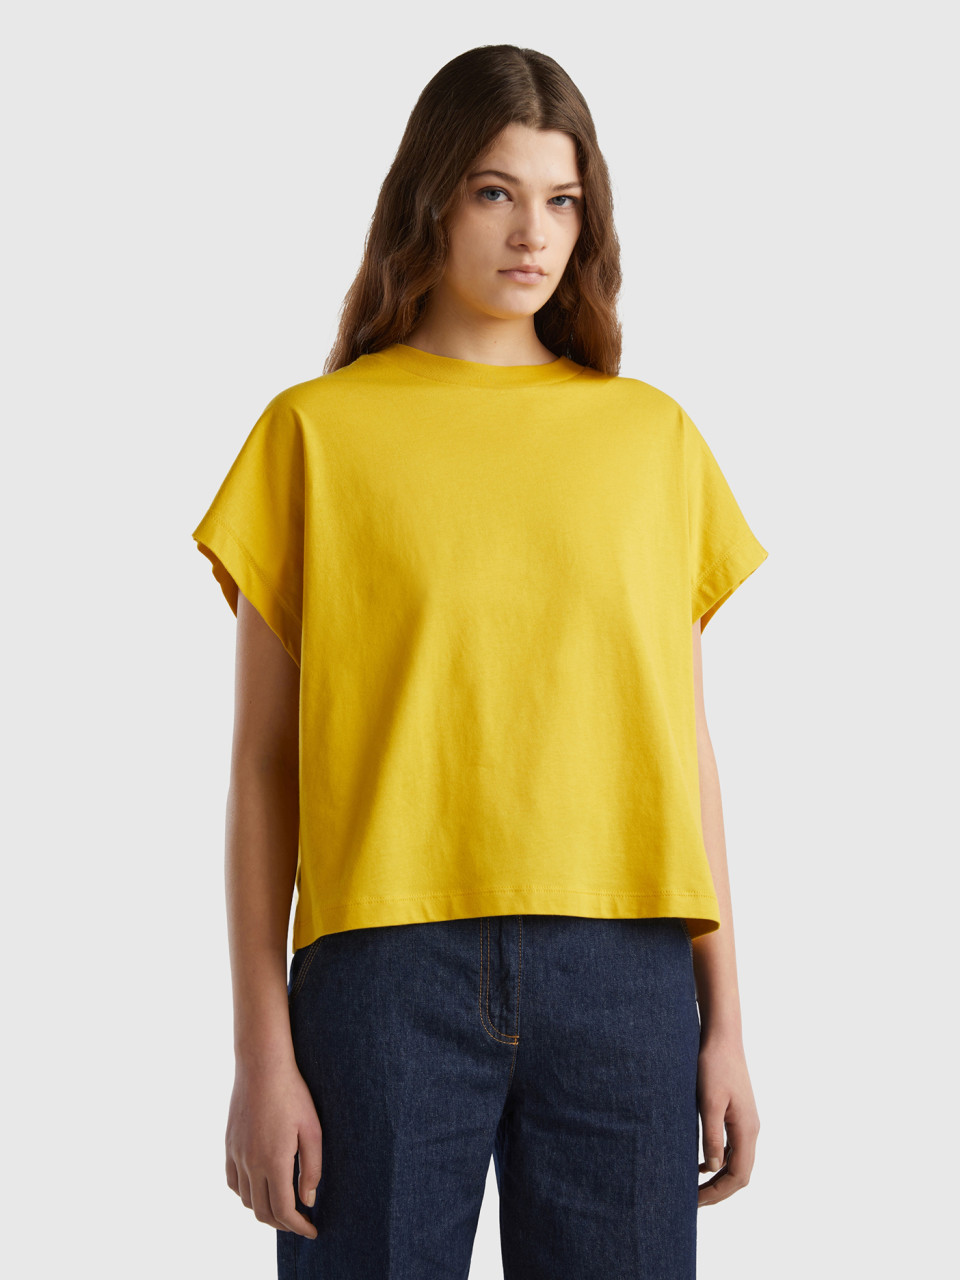 Benetton, Kimono Sleeve T-shirt, Yellow, Women